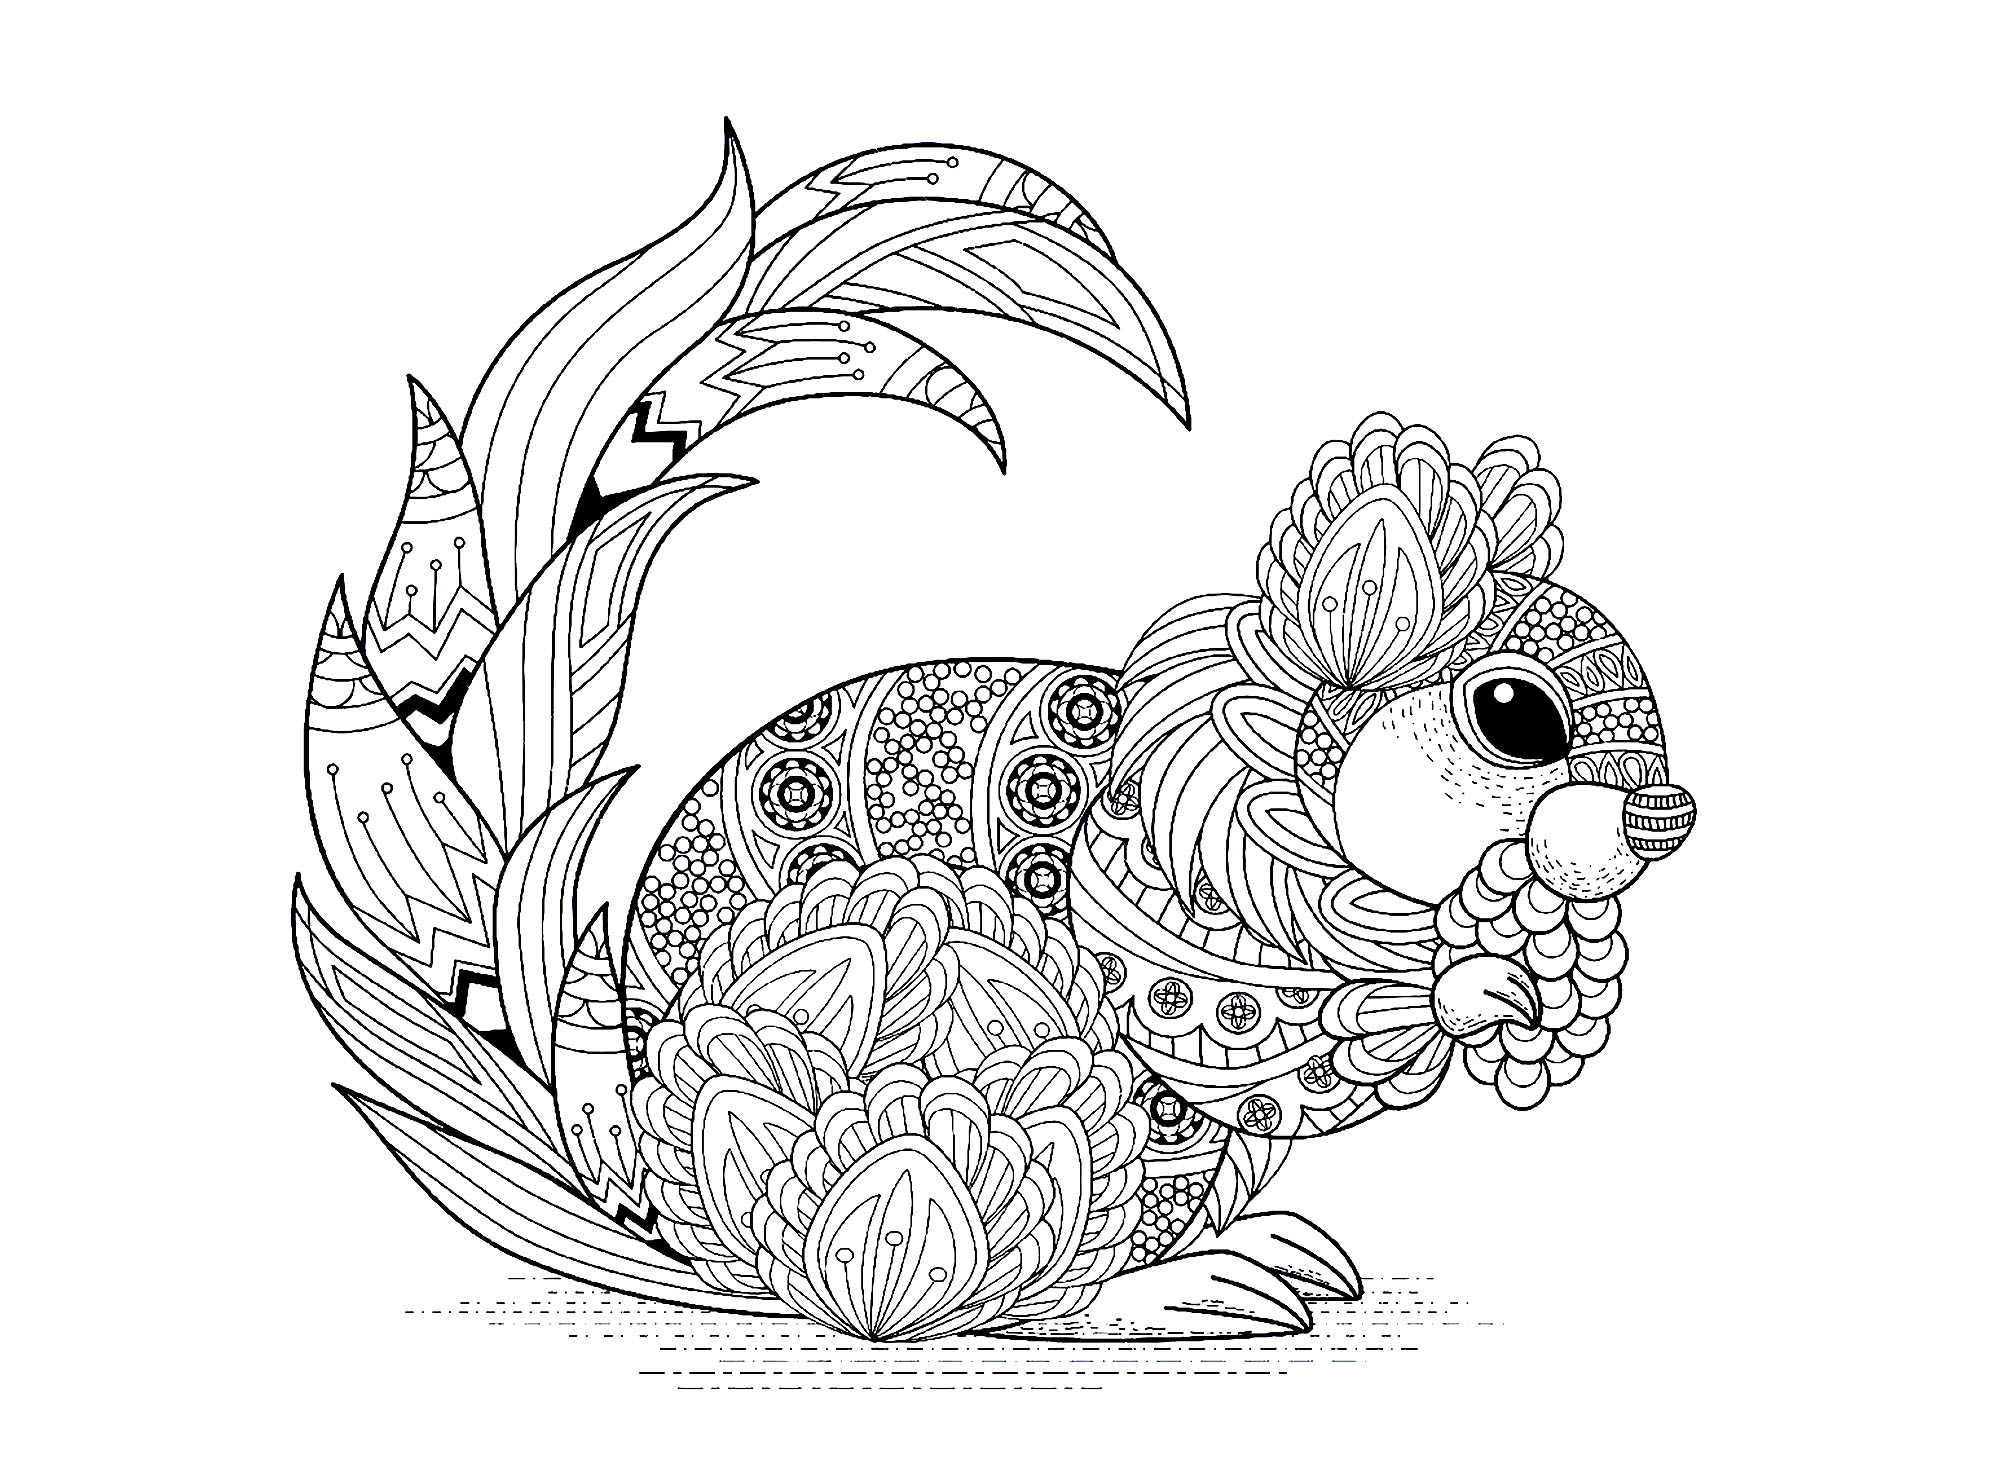 Squirrel with patterns, Artist : Kchung   Source : 123rf